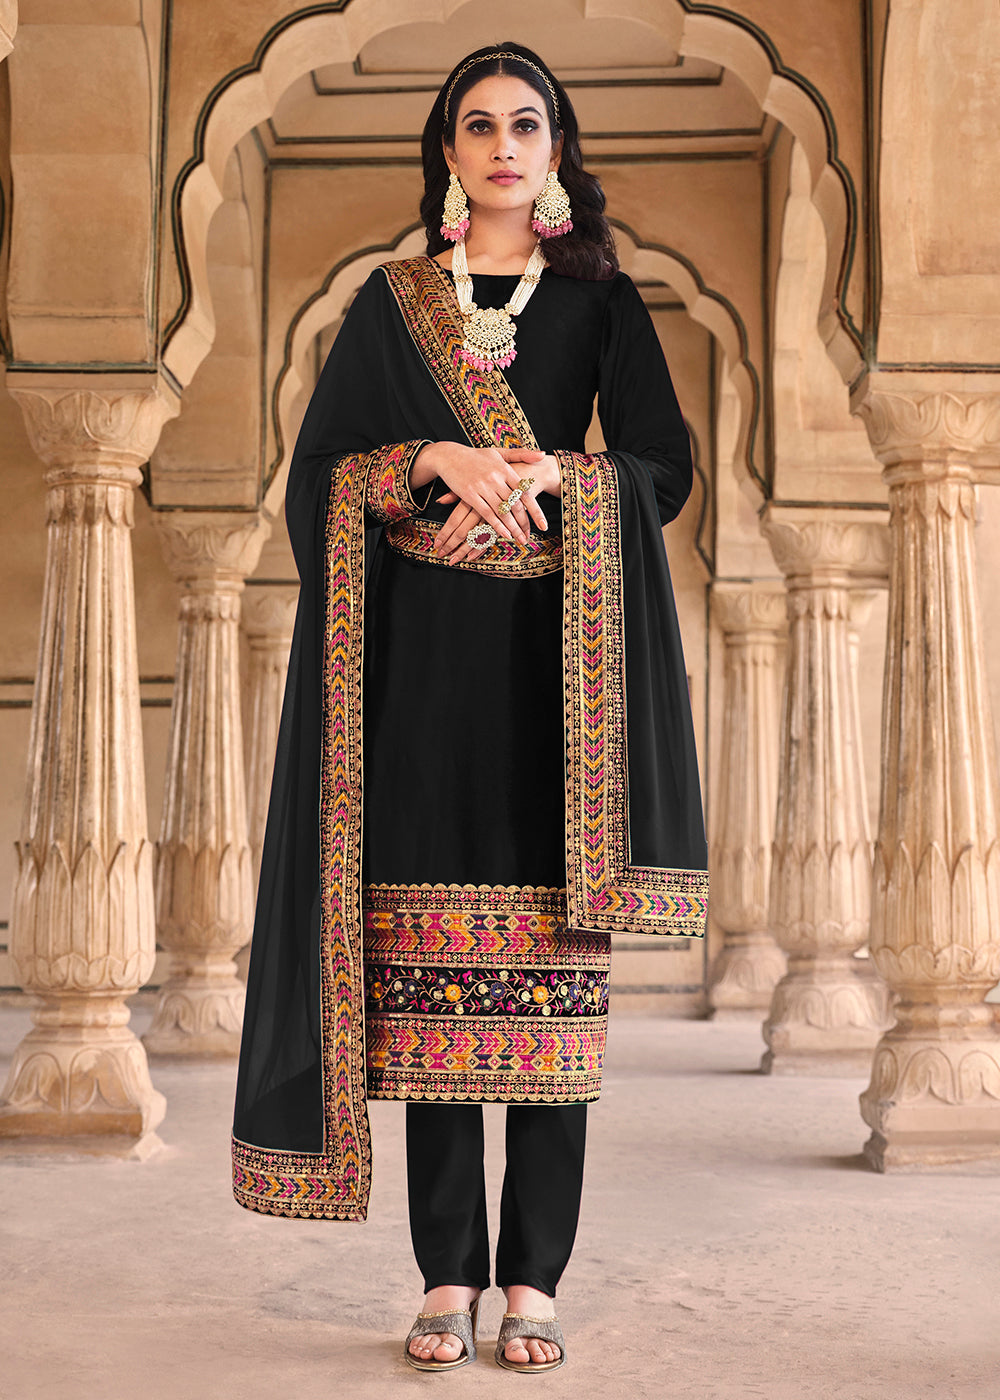 Ansab Jahangir – Women's Clothing Designer. Celebrity Spotted